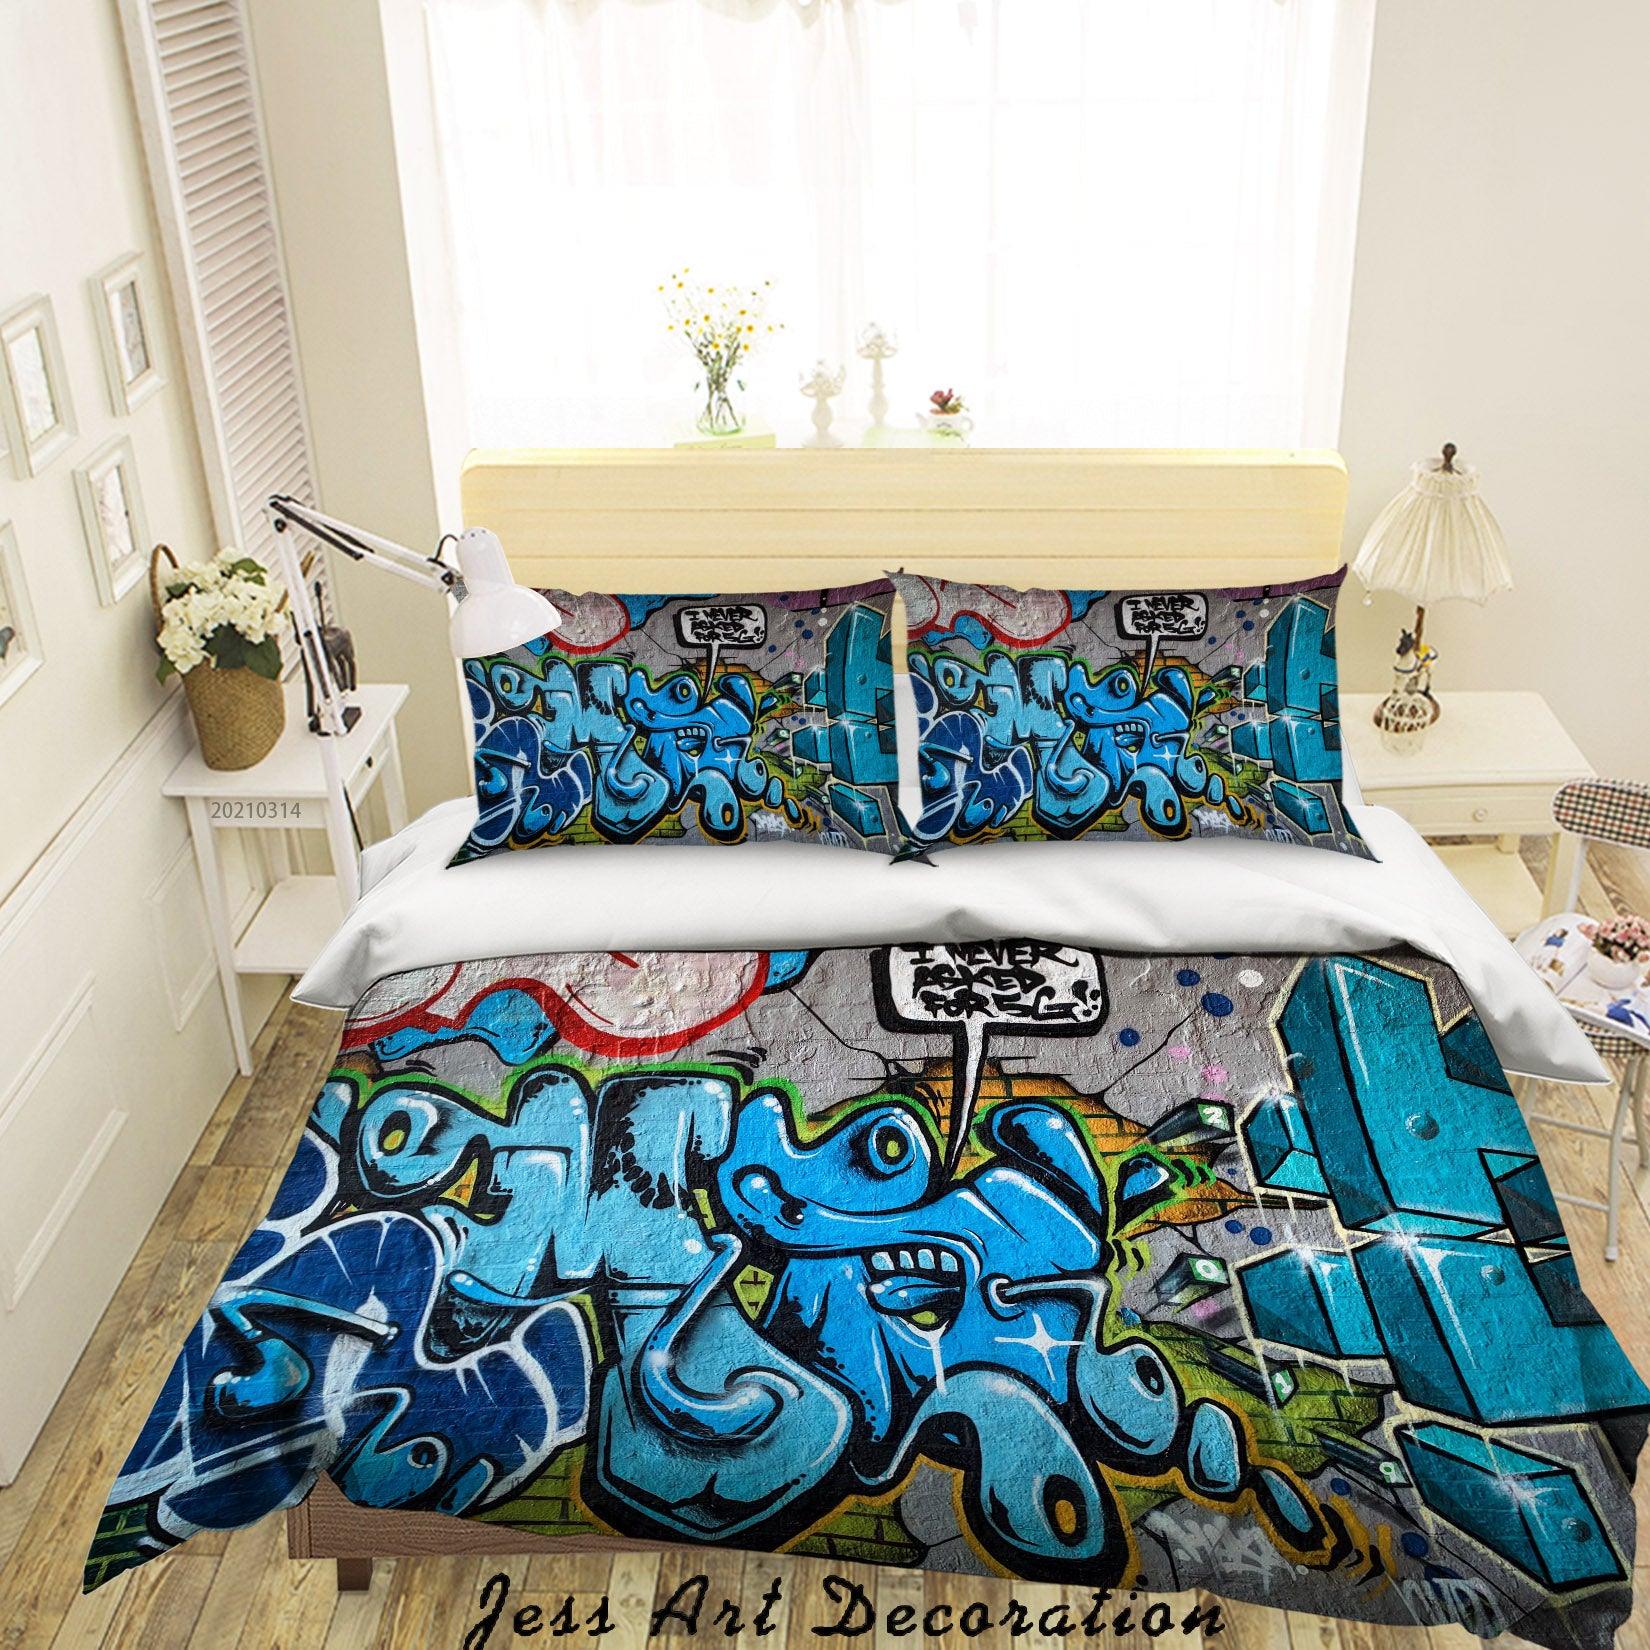 3D Abstract Blue Street Graffiti Quilt Cover Set Bedding Set Duvet Cover Pillowcases 187- Jess Art Decoration